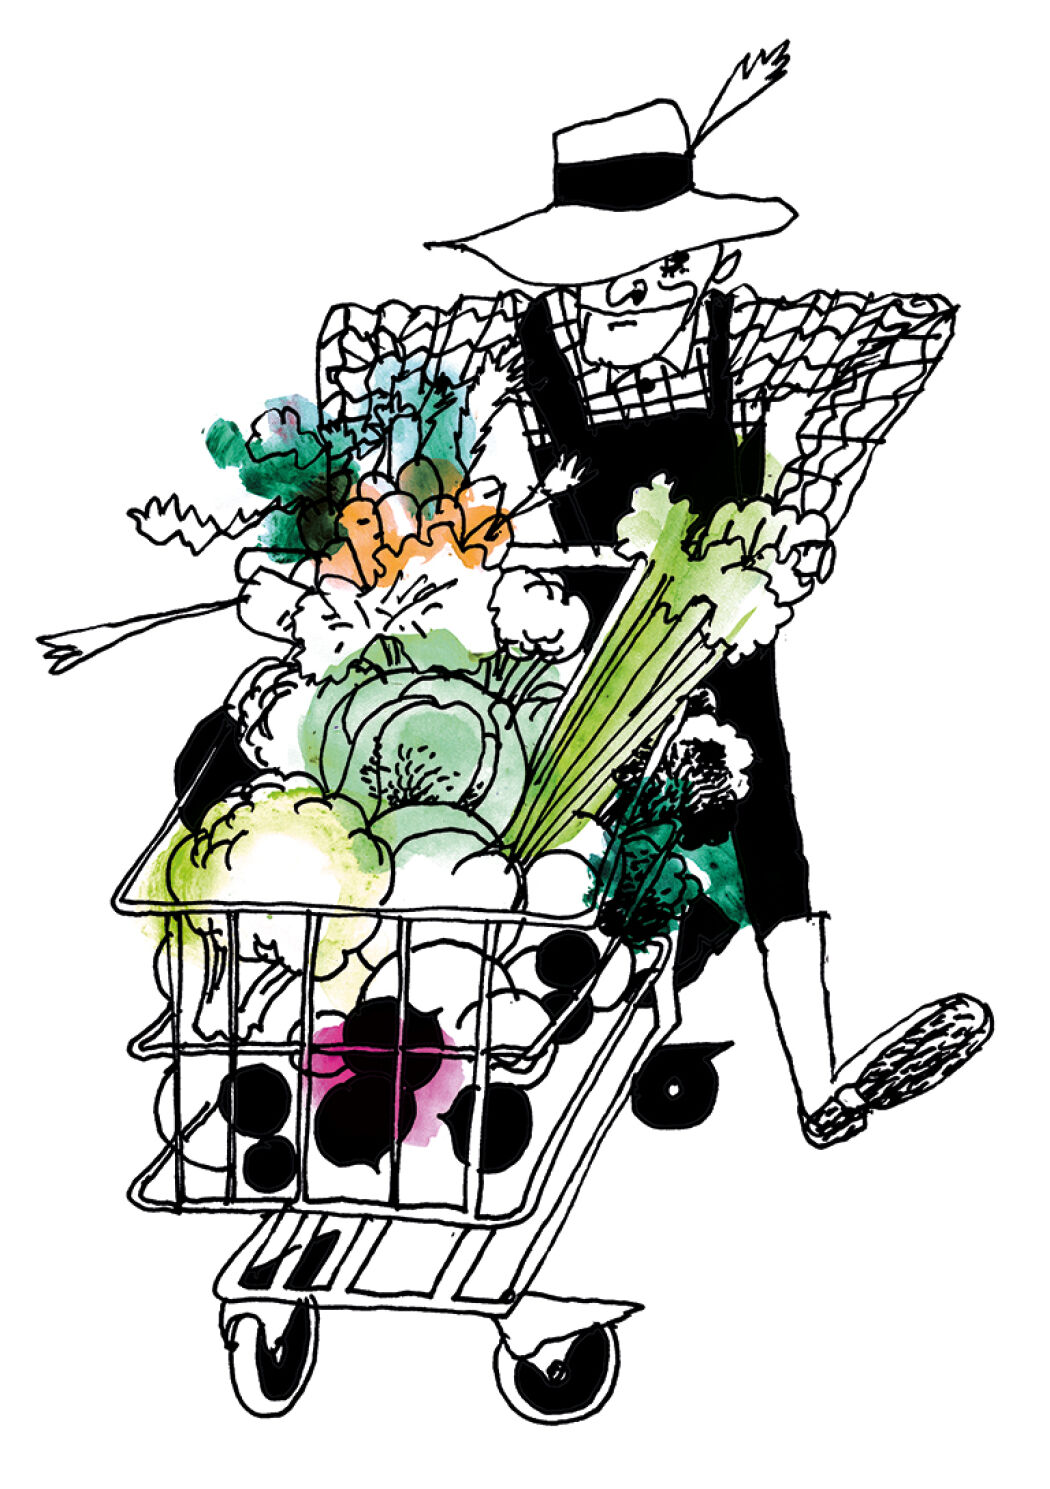 Foody lover illustration by Dennis Eriksson